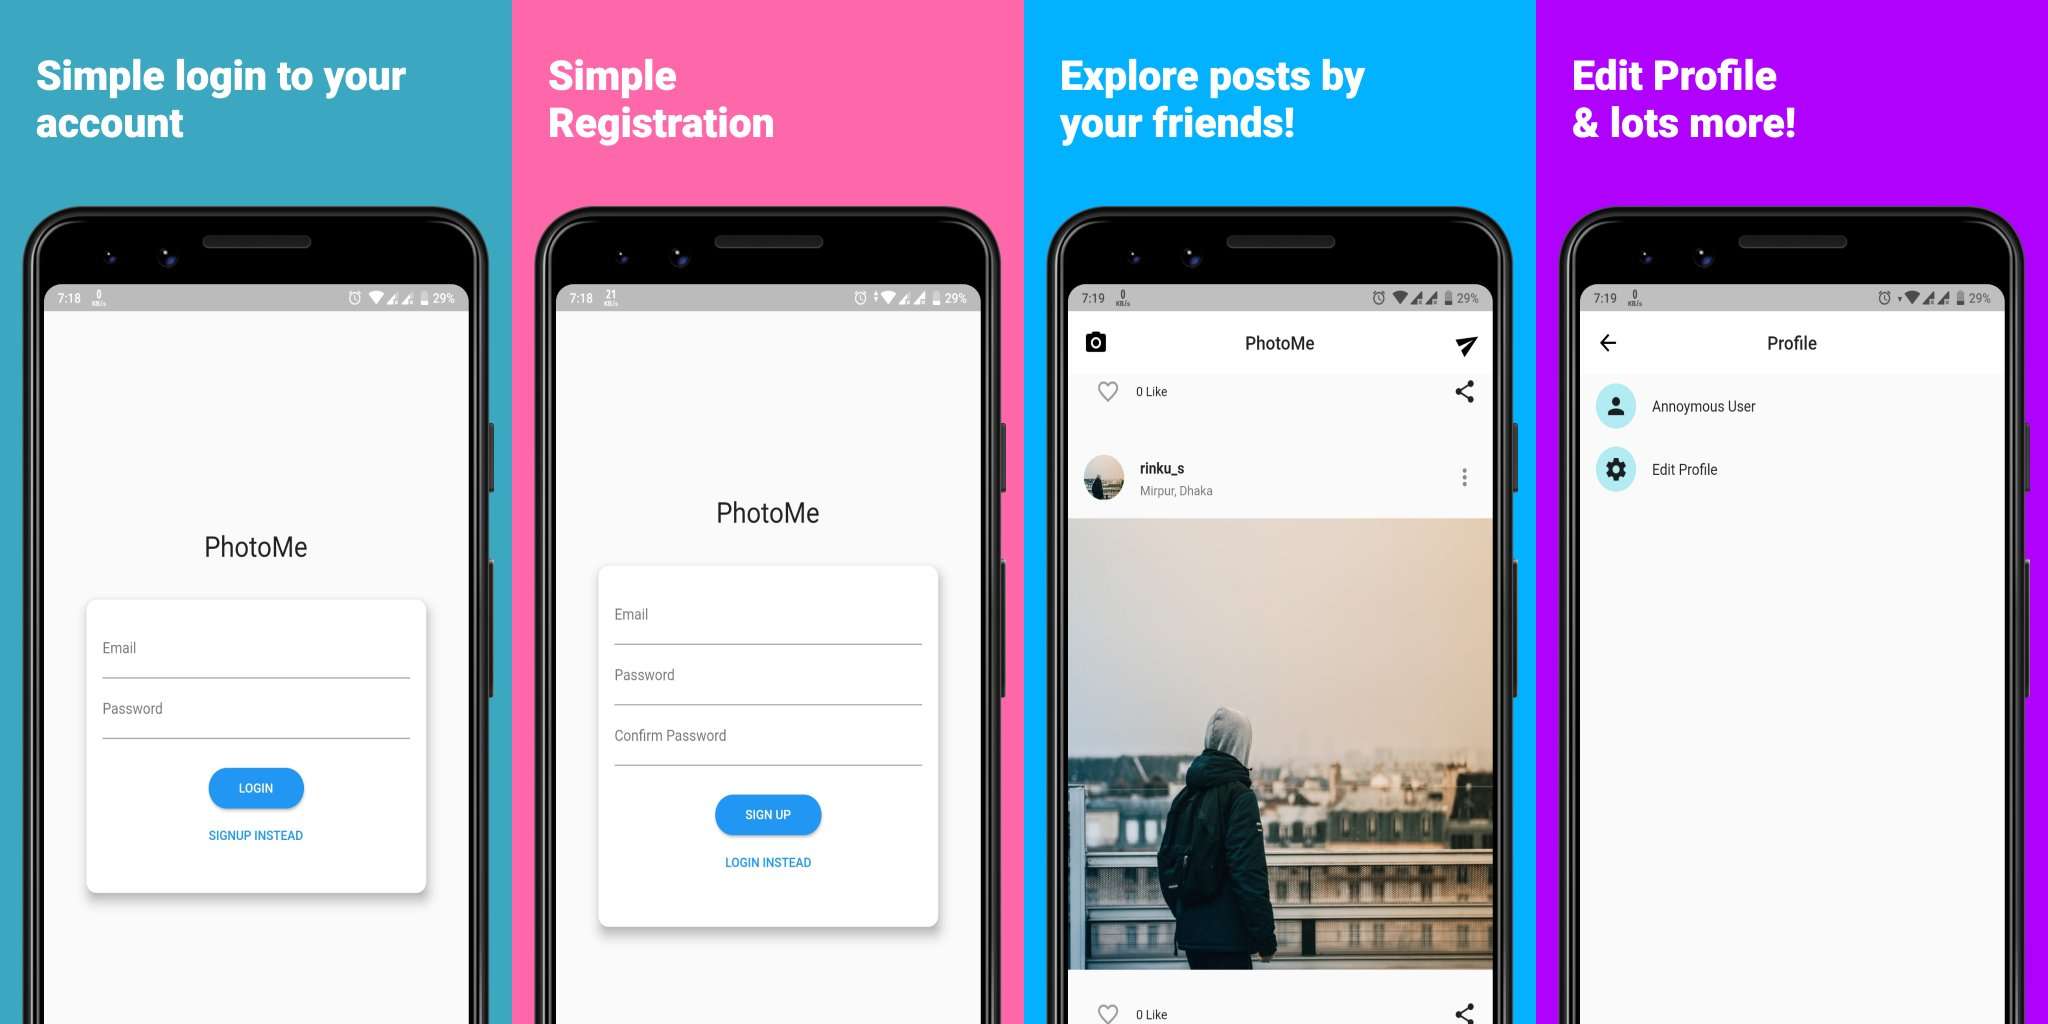 GitHub - utpal-barman/PhotoMe-flutter-social-network-app: PhotoMe is a